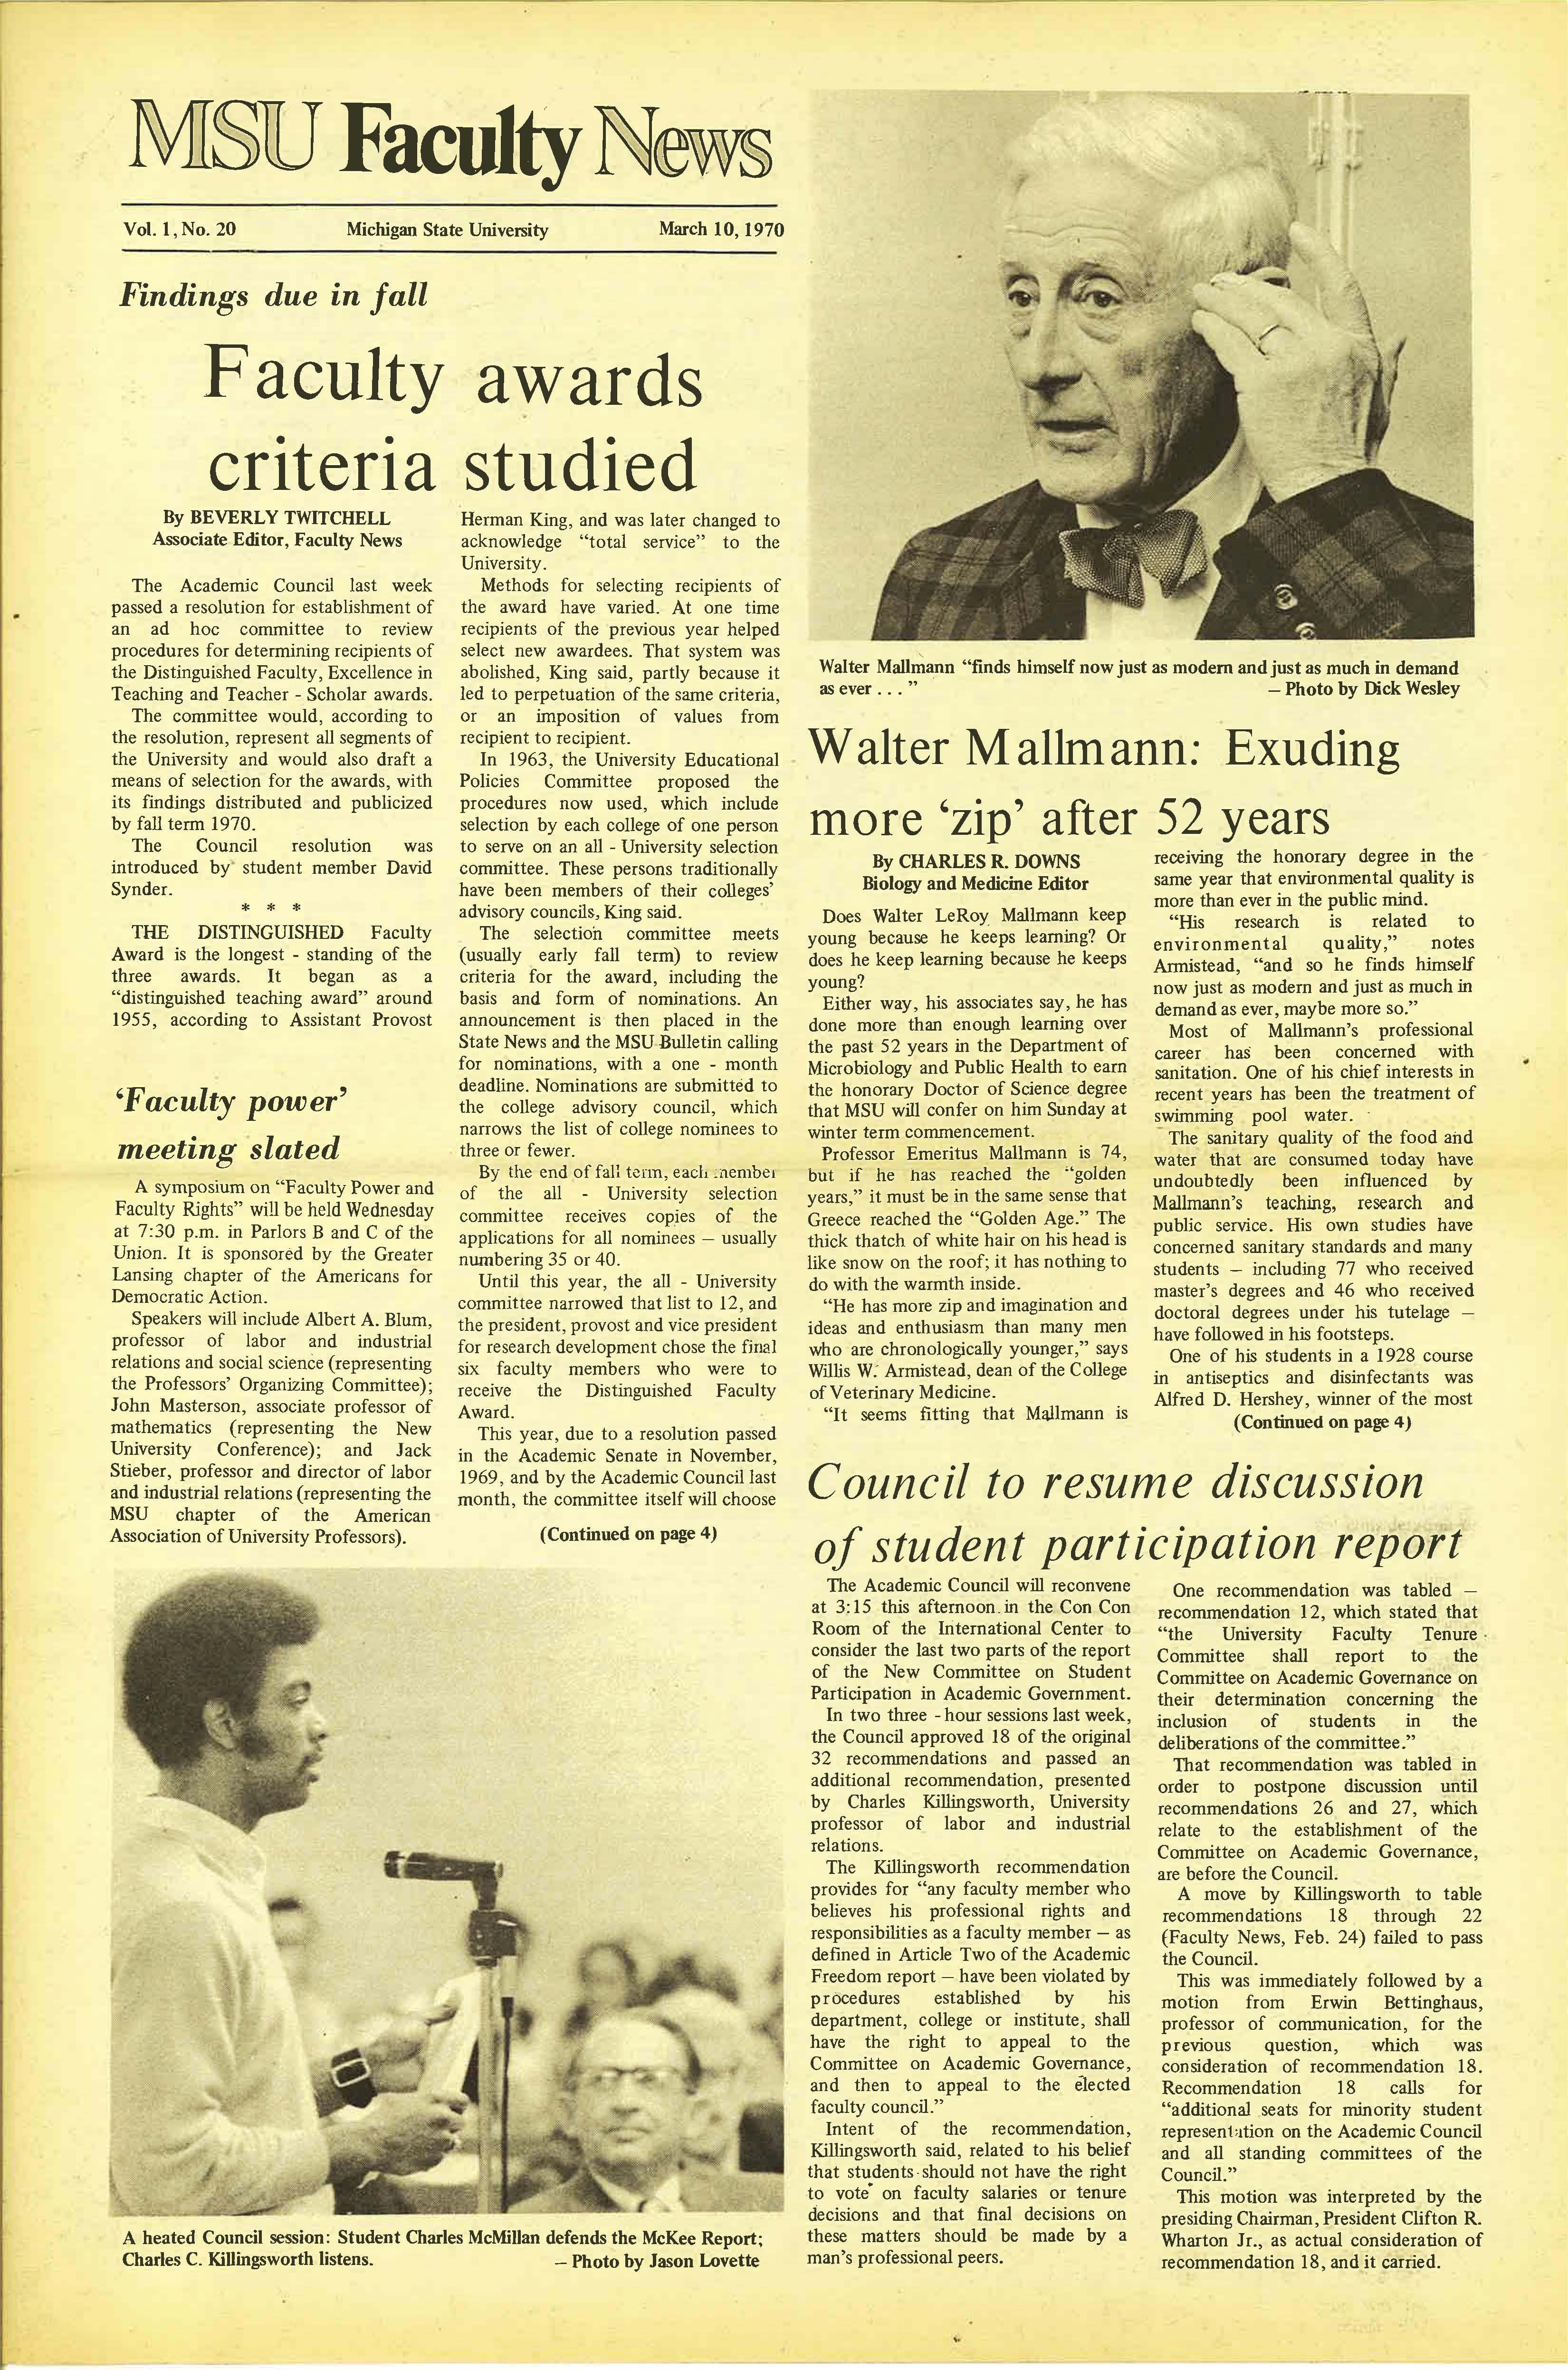 MSU News Bulletin, Vol. 1, No. 19, March 3, 1970